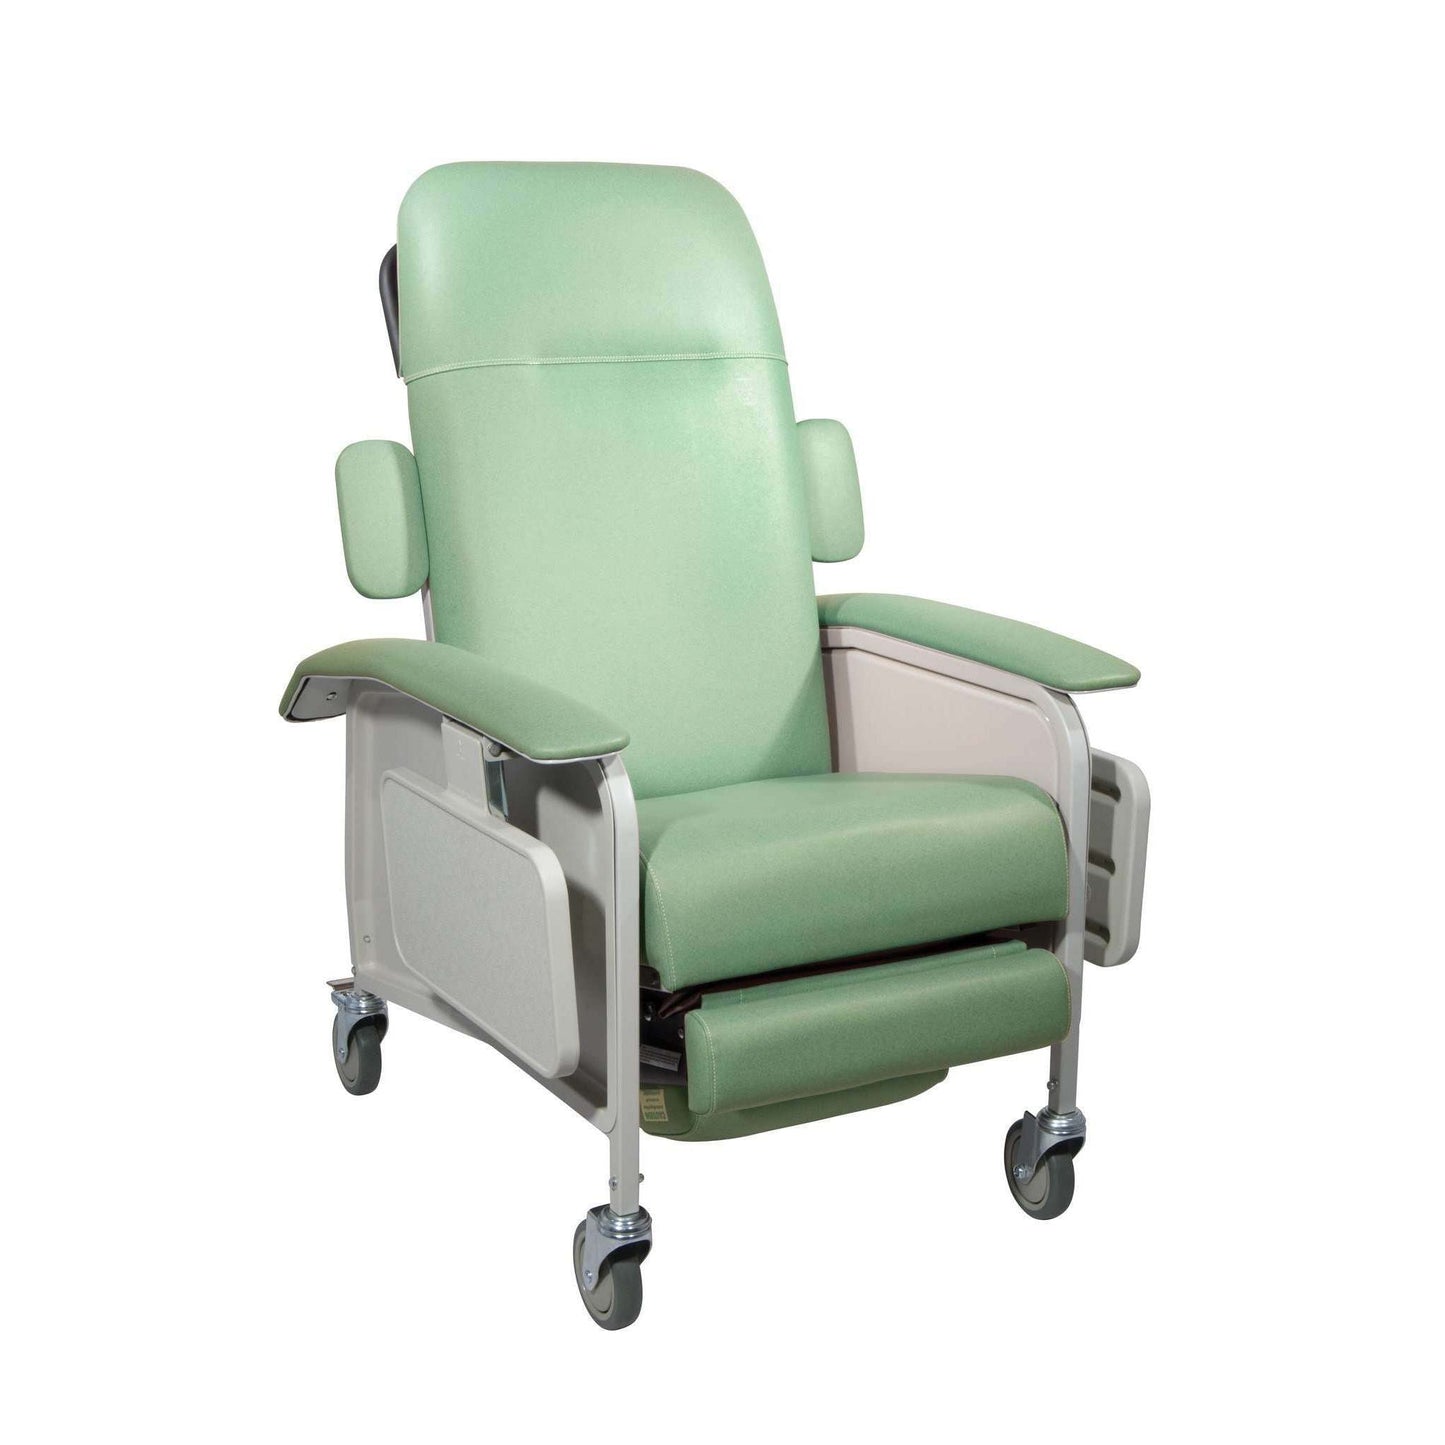 Drive Medical d577-j Clinical Care Geri Chair Recliner, Jade